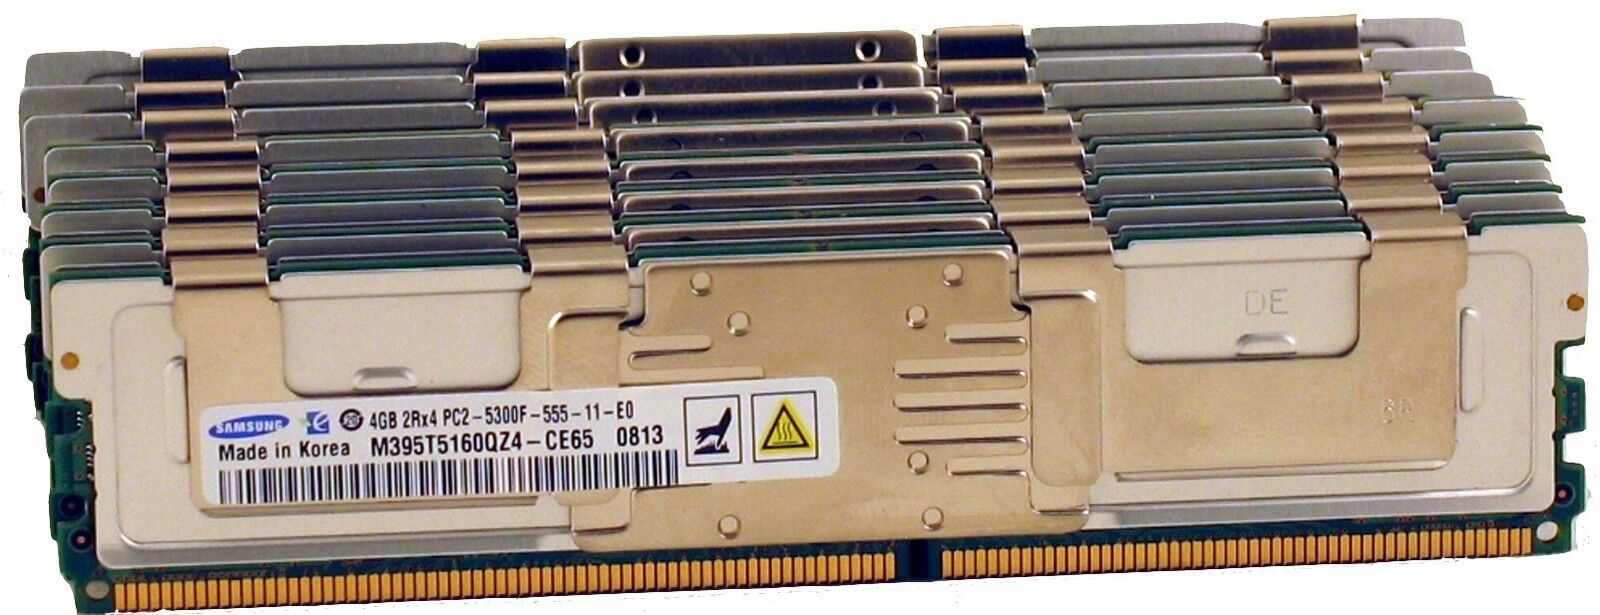 32GB DDR2-667MHz- For Dell Precision Workstation 490, 690, t5400, t7400 & R5400